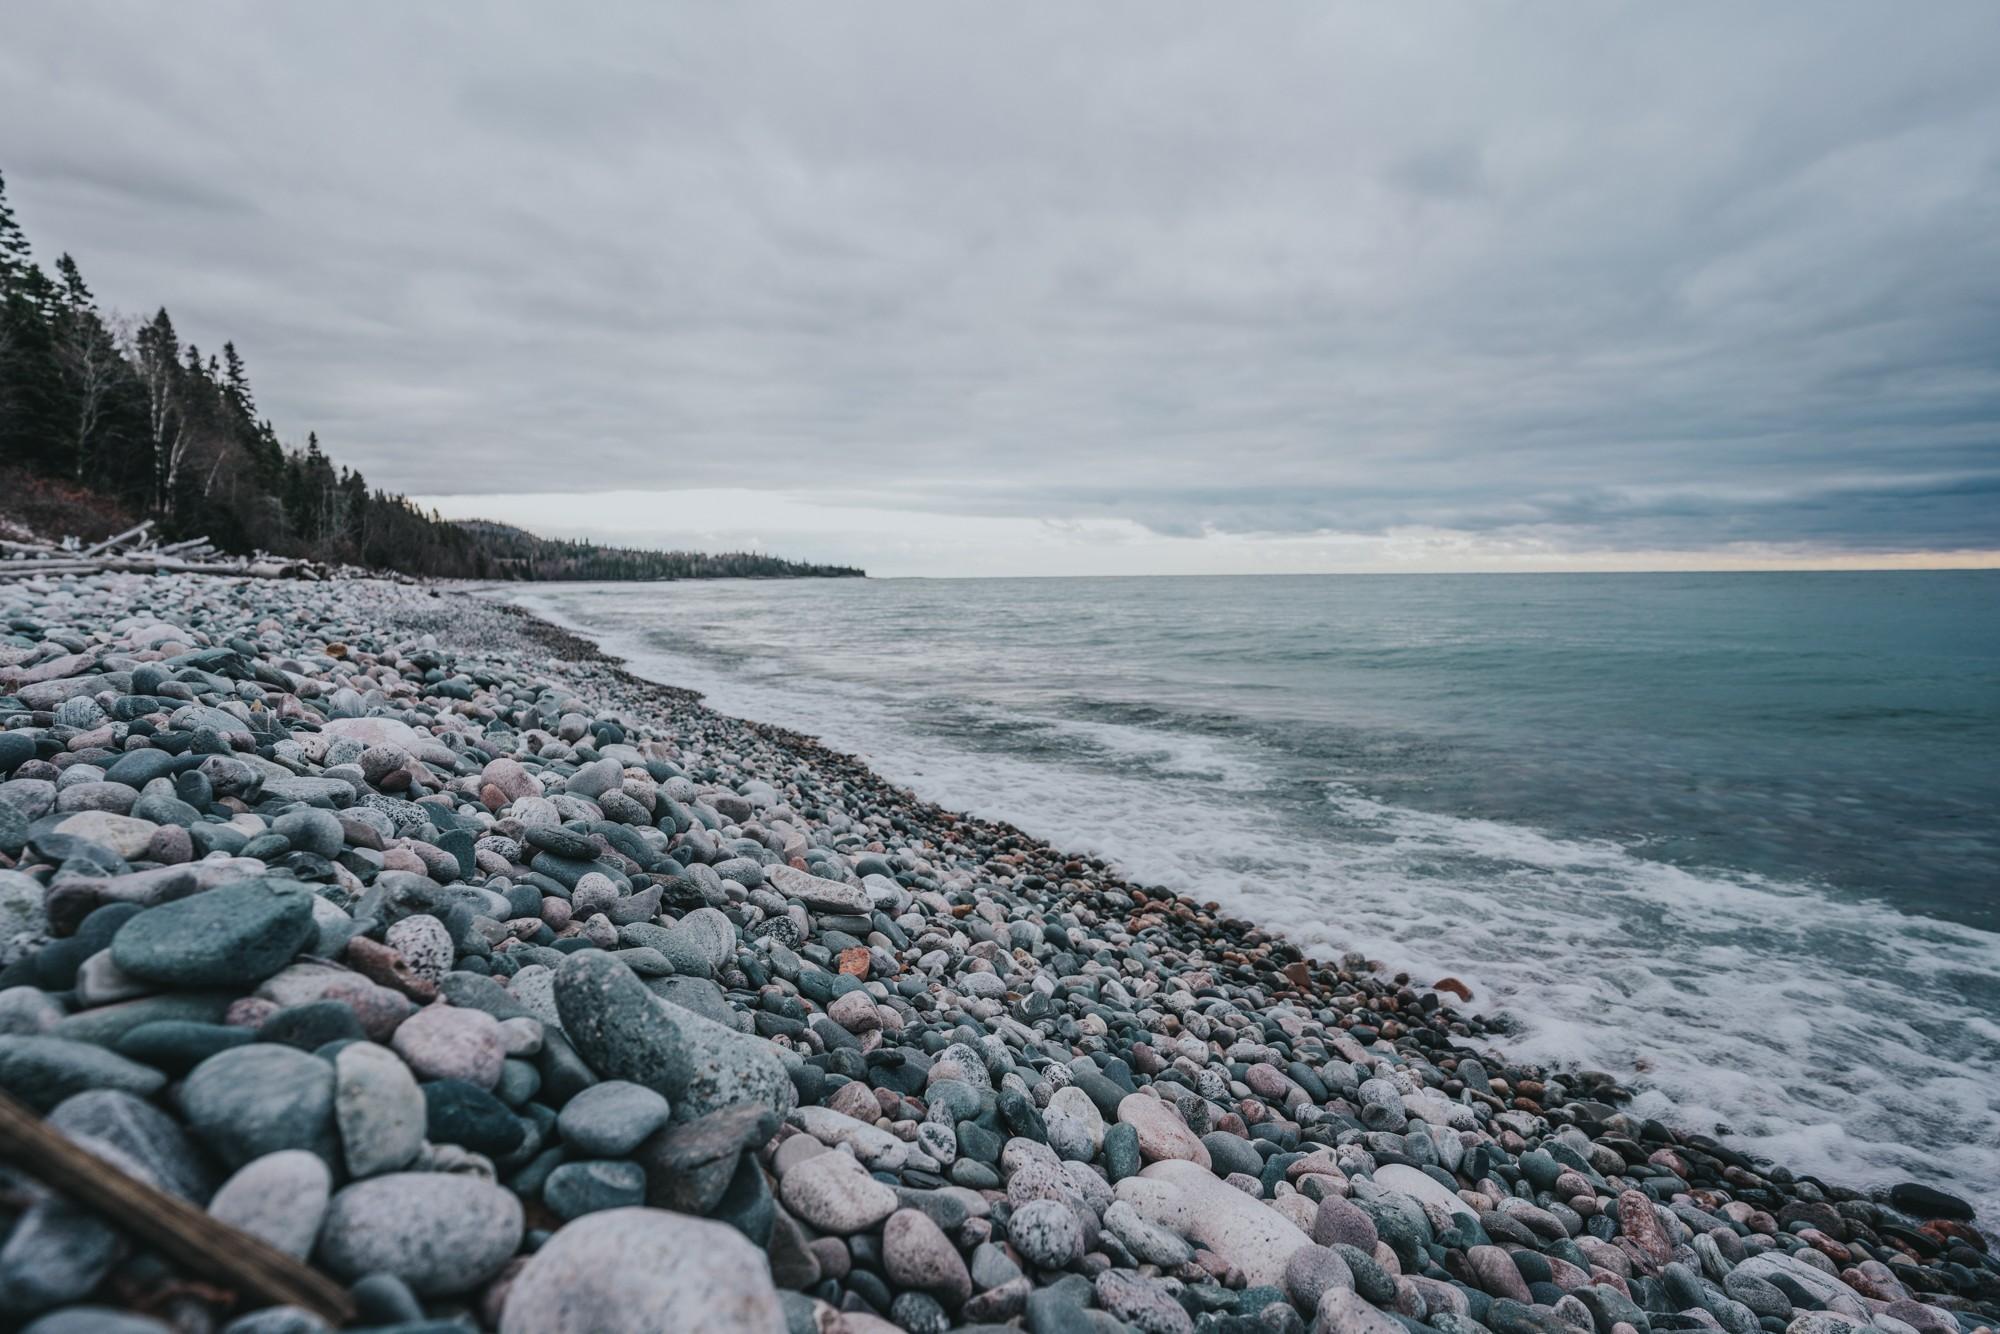 Canada Ontario Pukaskwa National Park pebble beach 07180